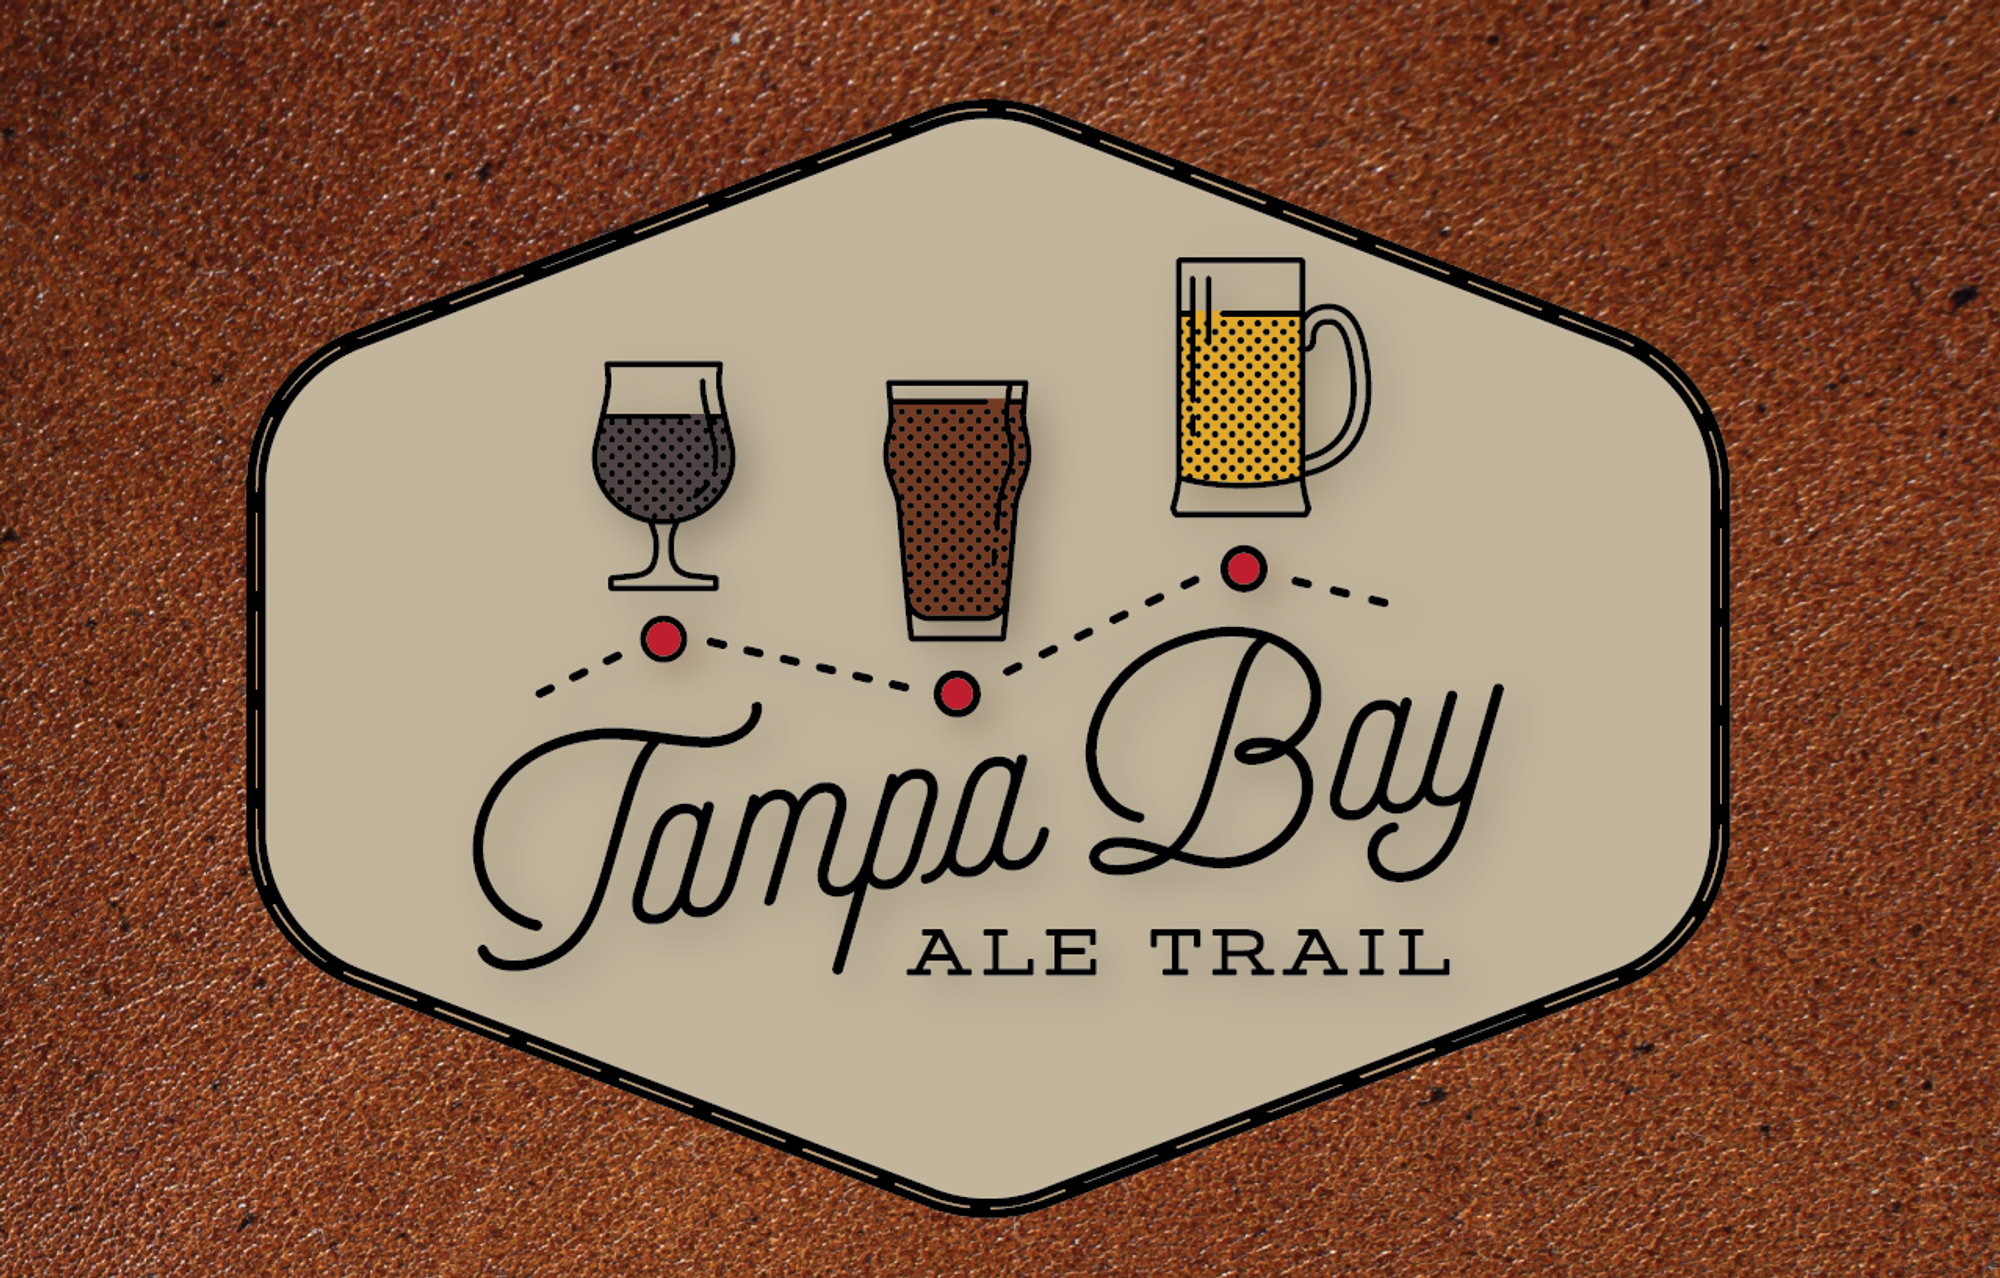 Tampa Bay Ale Trail